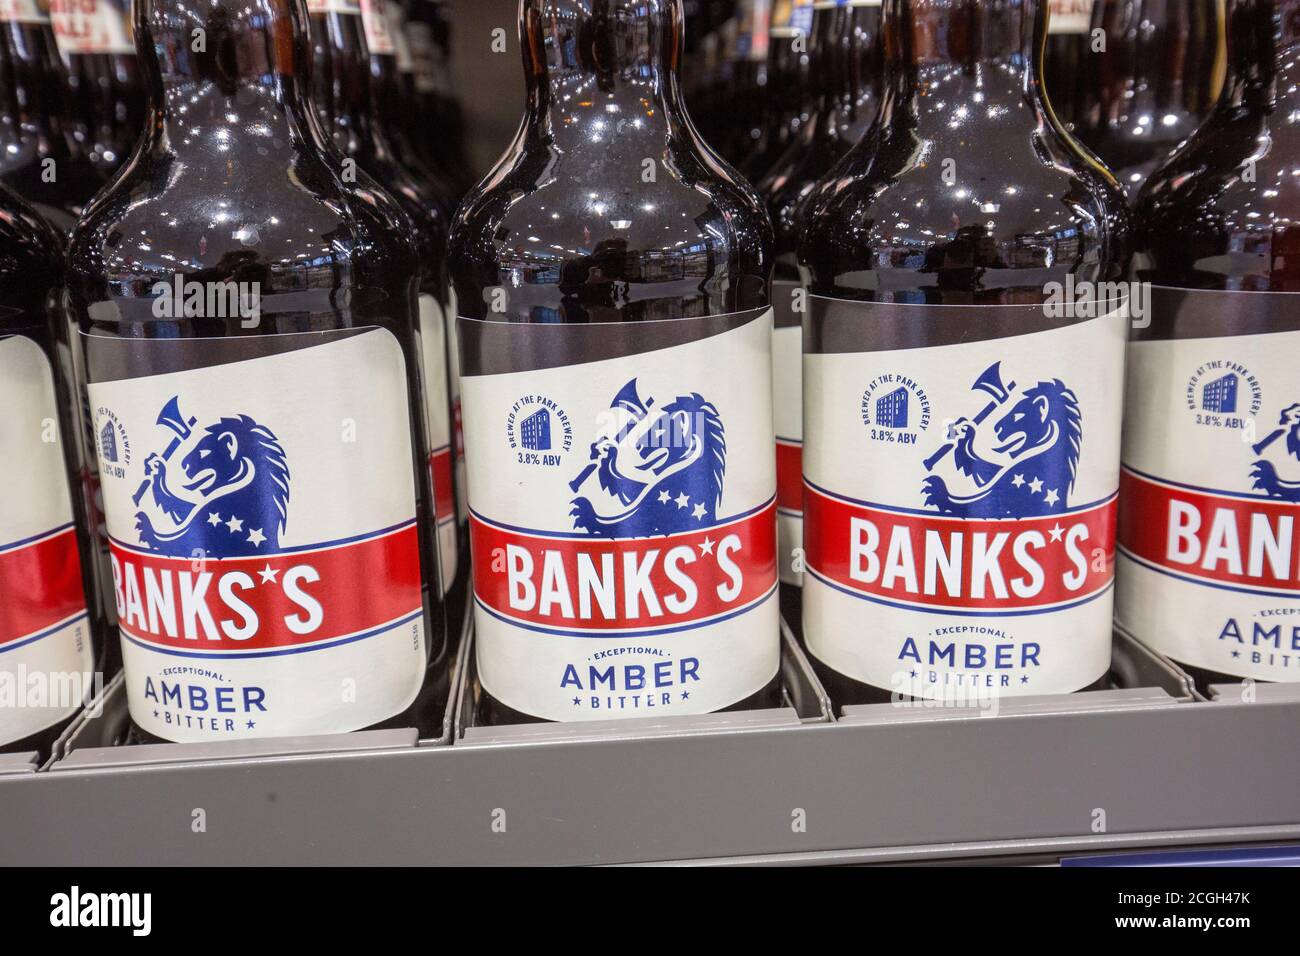 Bottles of Bank's beer in an Aldi Supermarket Stock Photo